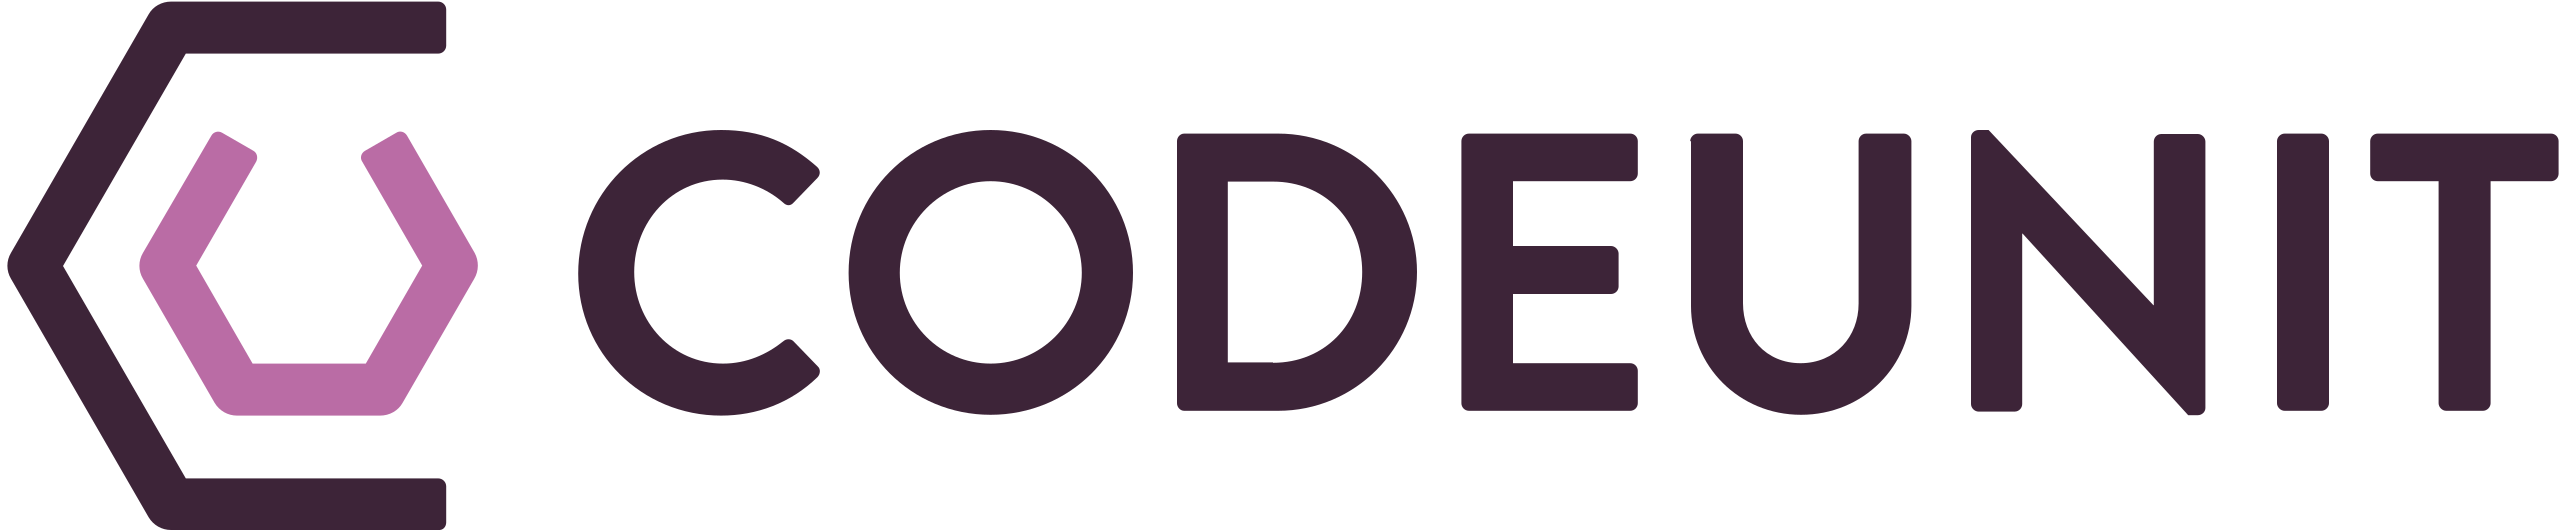 Codeunit logo